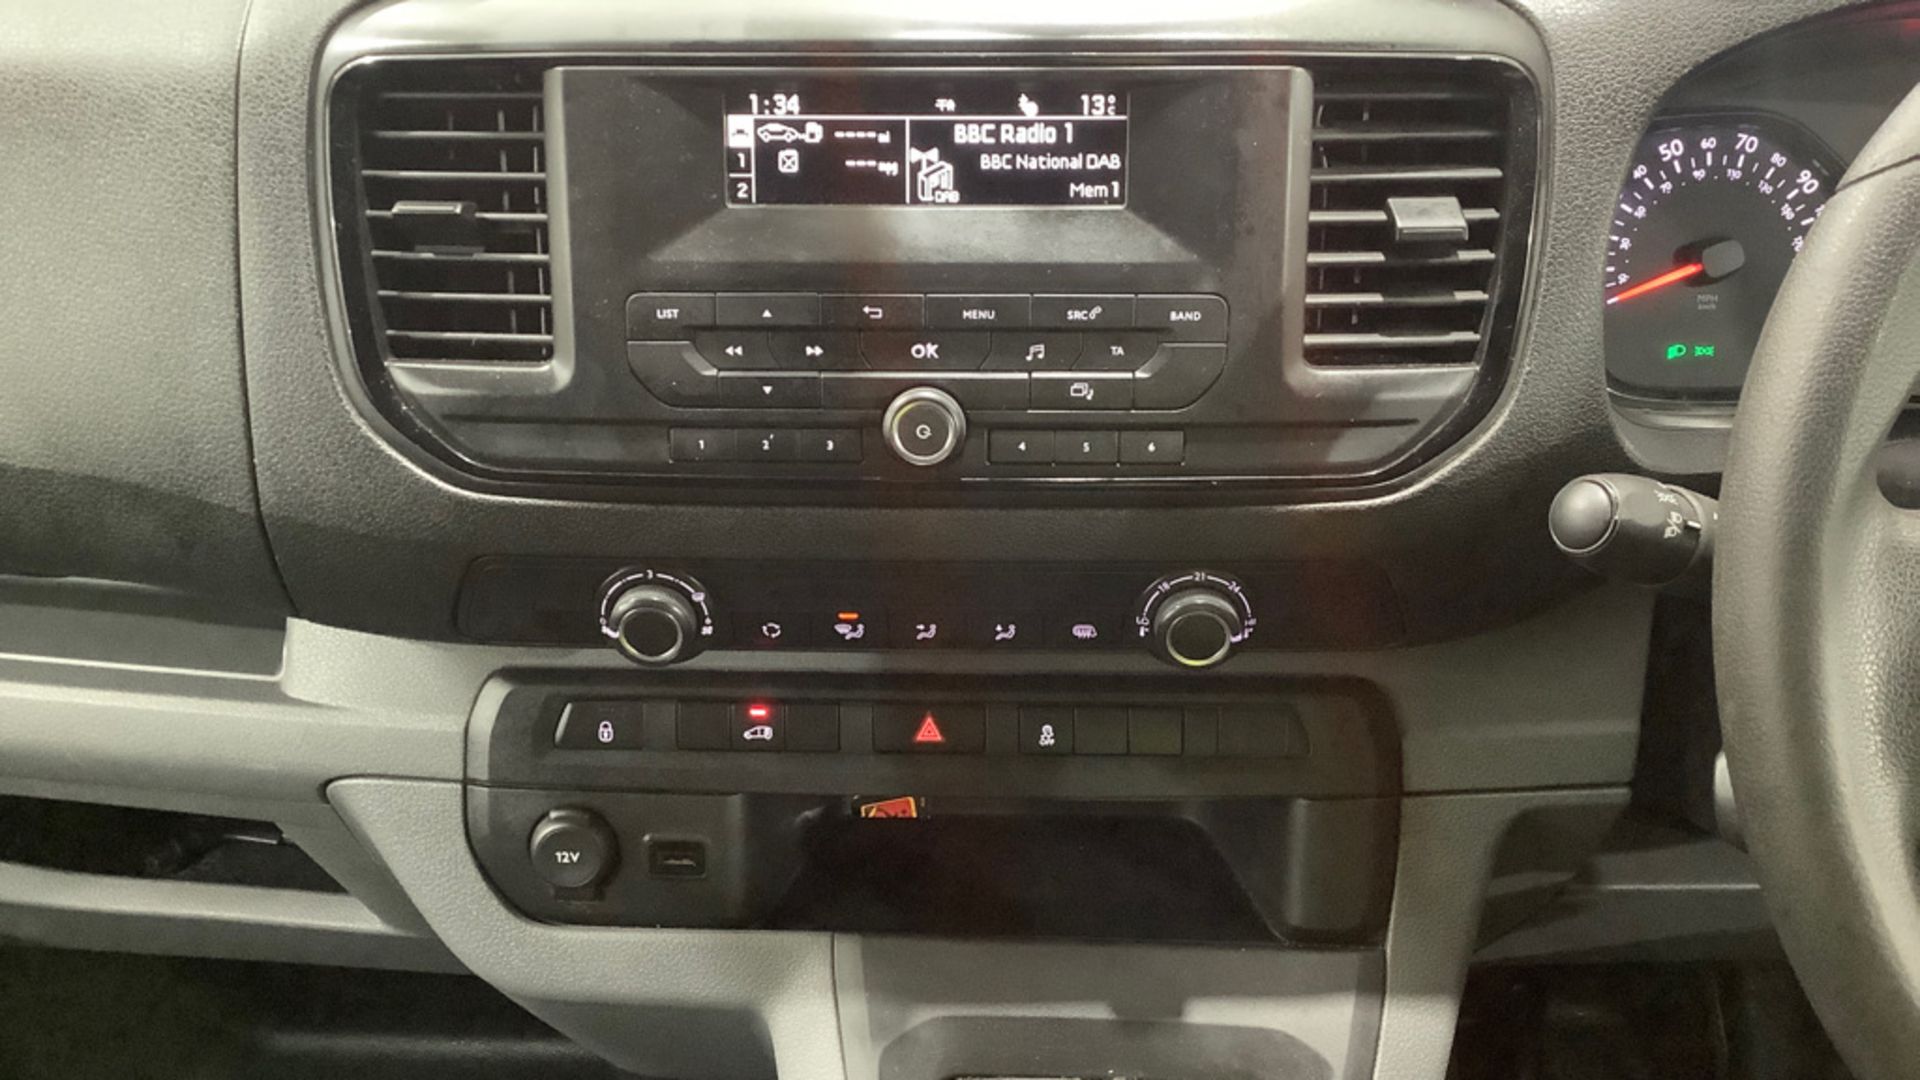 ** ON SALE ** Peugeot Expert 1.6 BlueHdi 95 Standard L2H1 Panel Van 2017 '17 Reg' -CD Player - Image 8 of 9